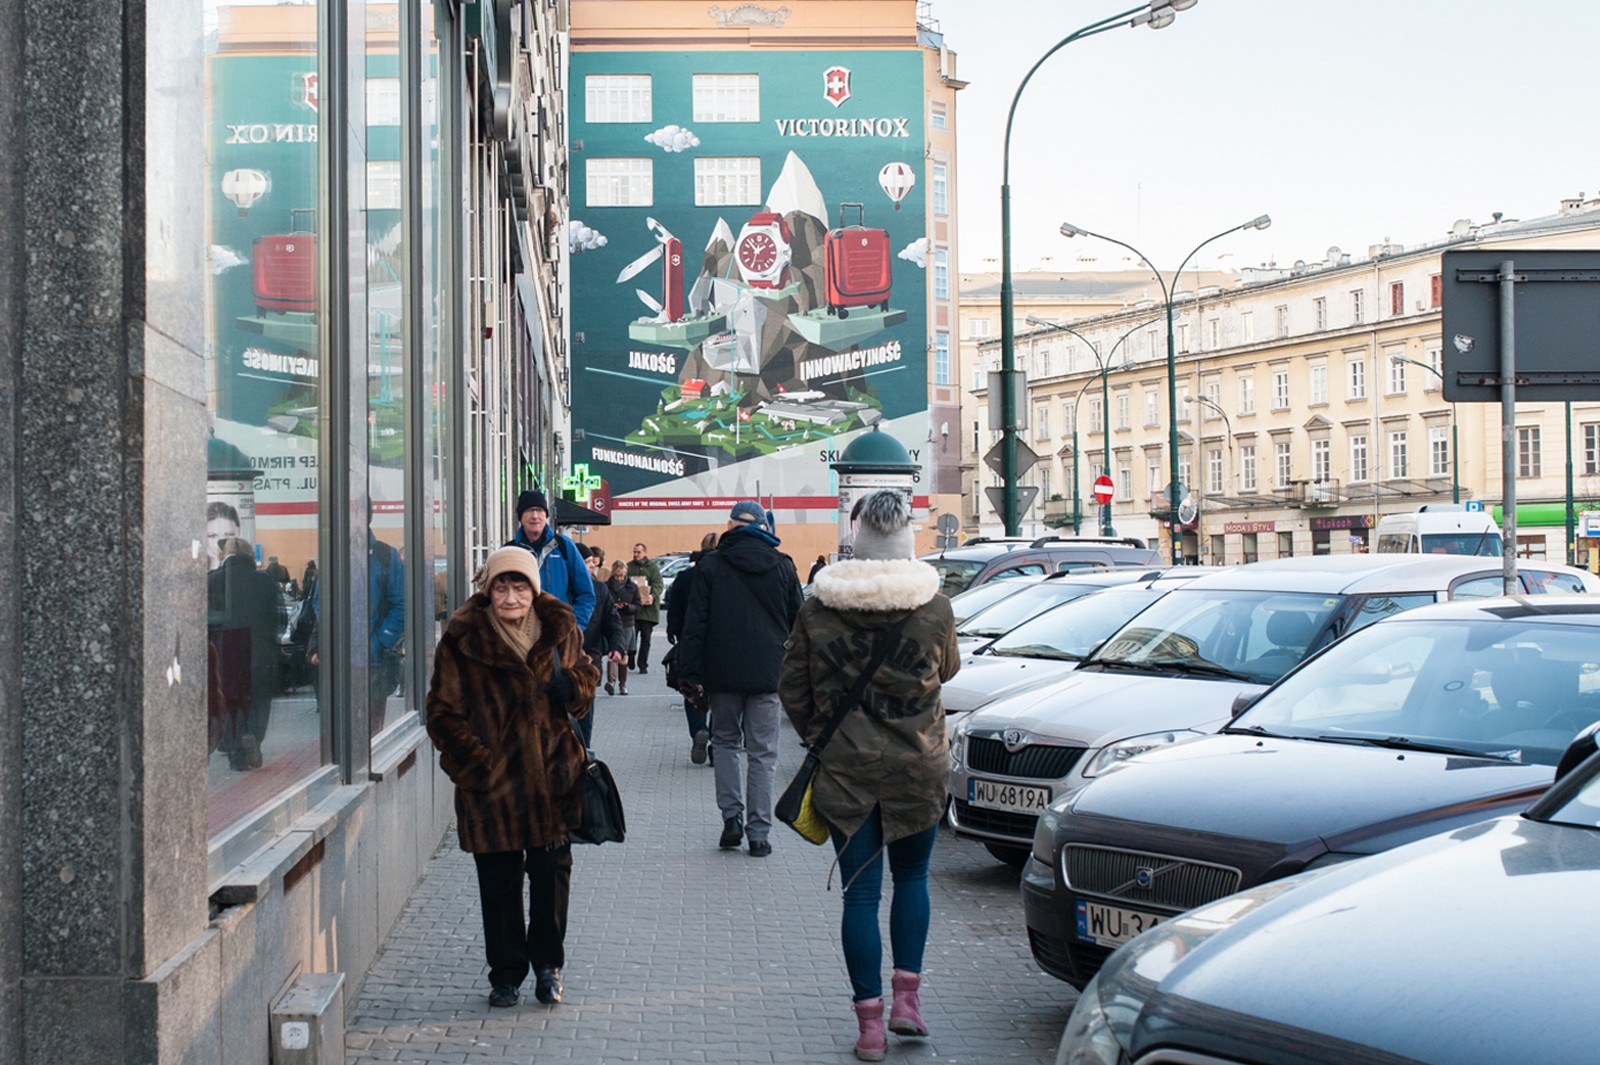 Hand painted advertisement of a Victorinox store located on Ptasia street in Warsaw | Realizacja murali dla Victorinox  | Portfolio